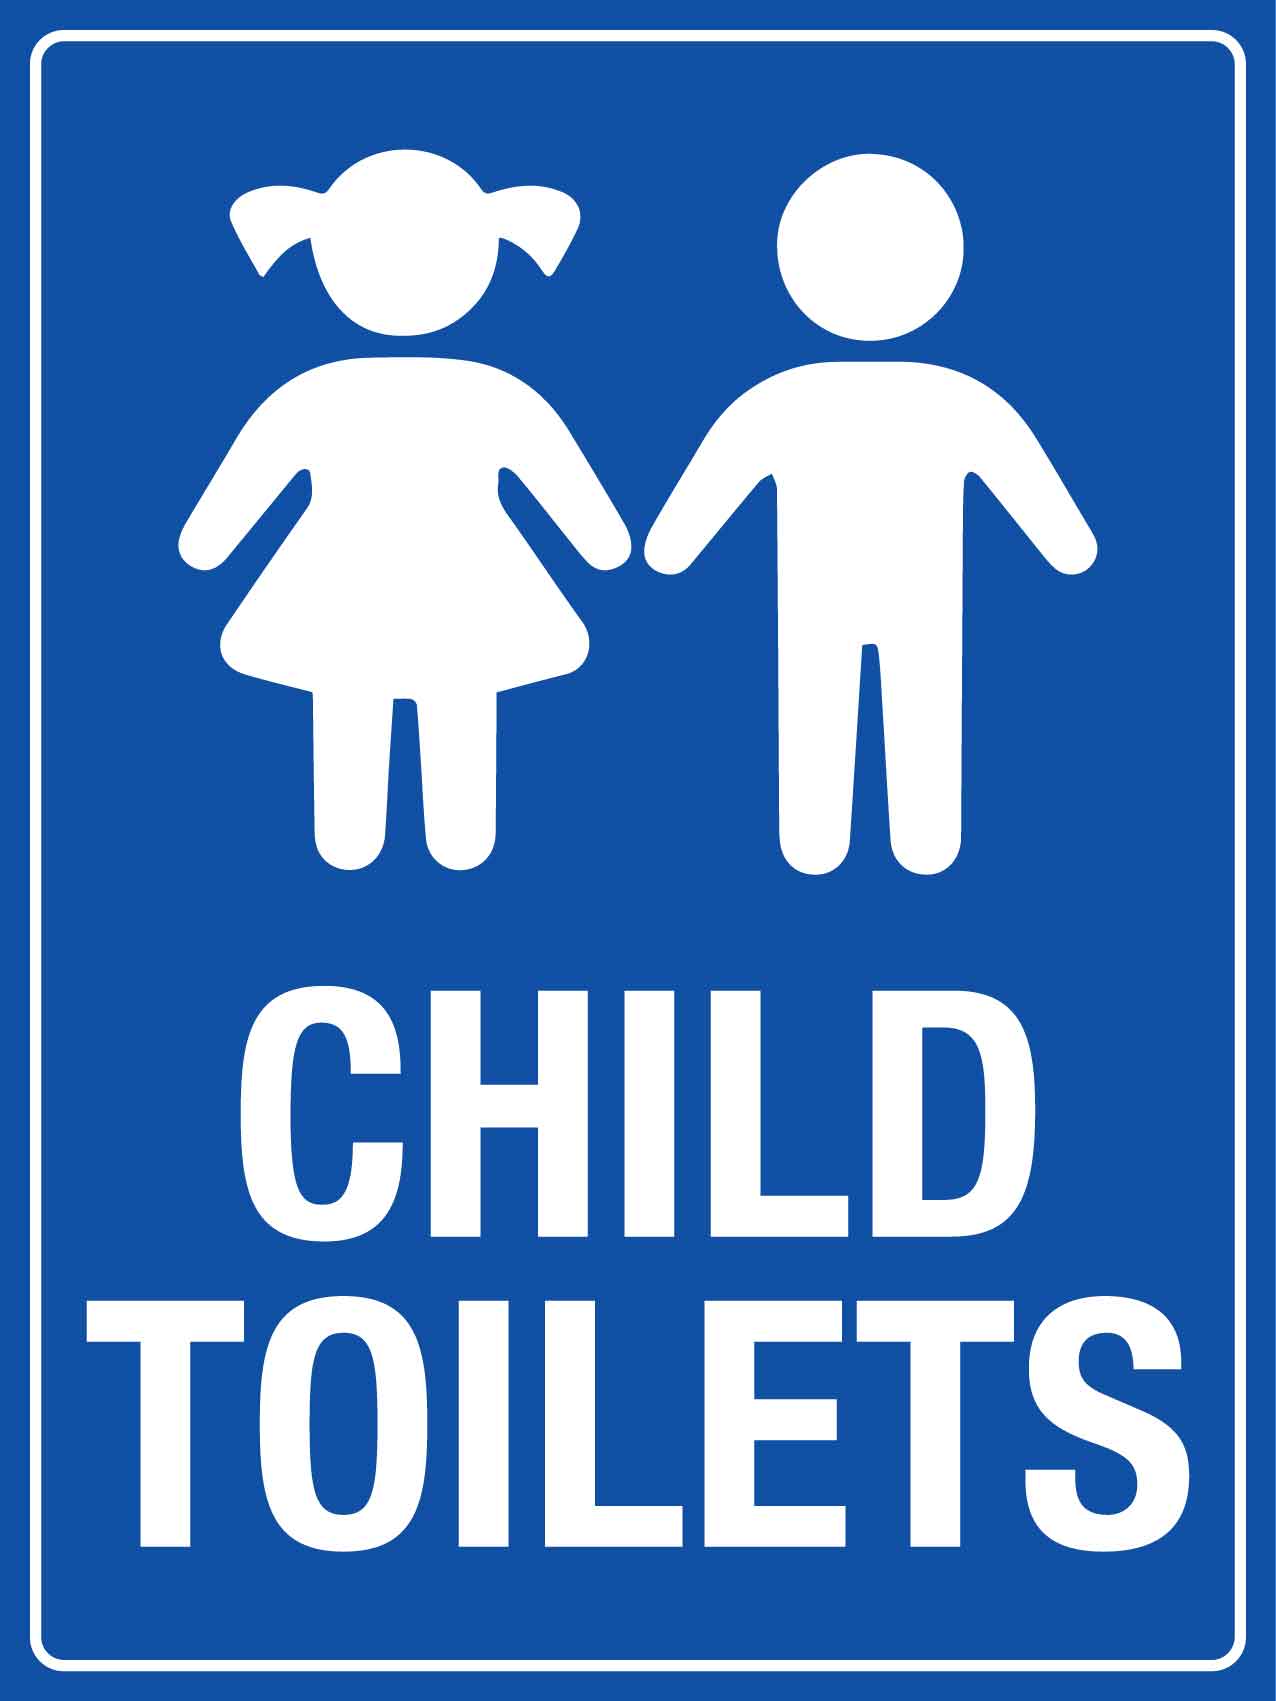 Child Toilets Sign